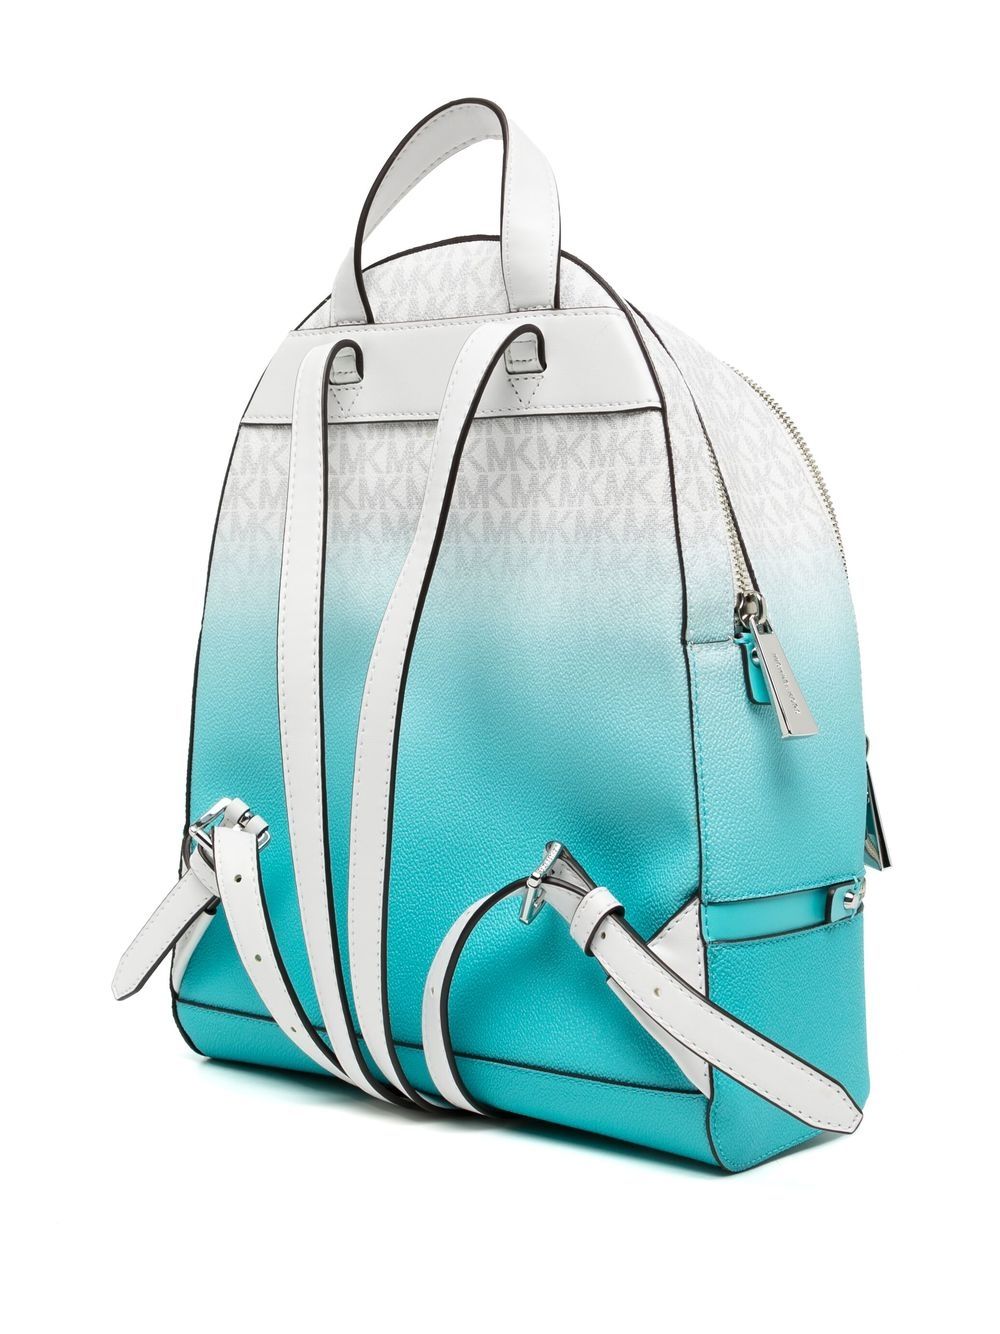 Michael Kors Prescott Large Backpack Heather Grey One Size